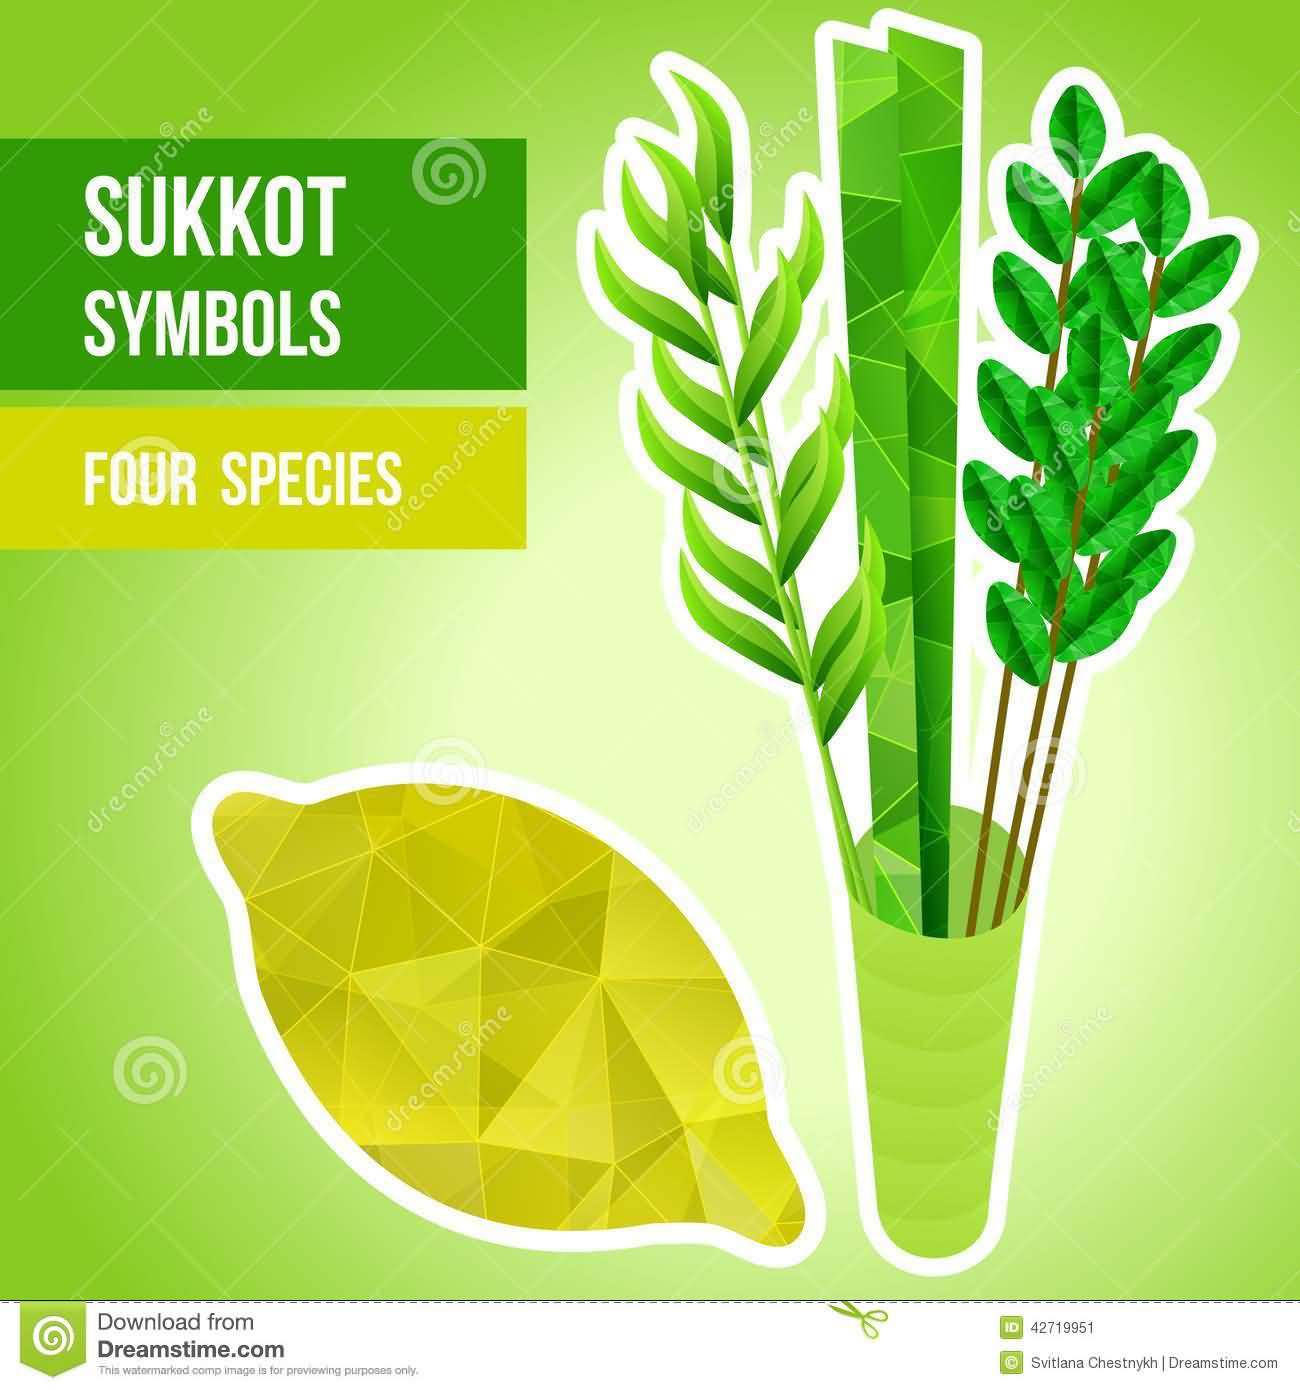 Sukkot Symbols Four Species Illustration